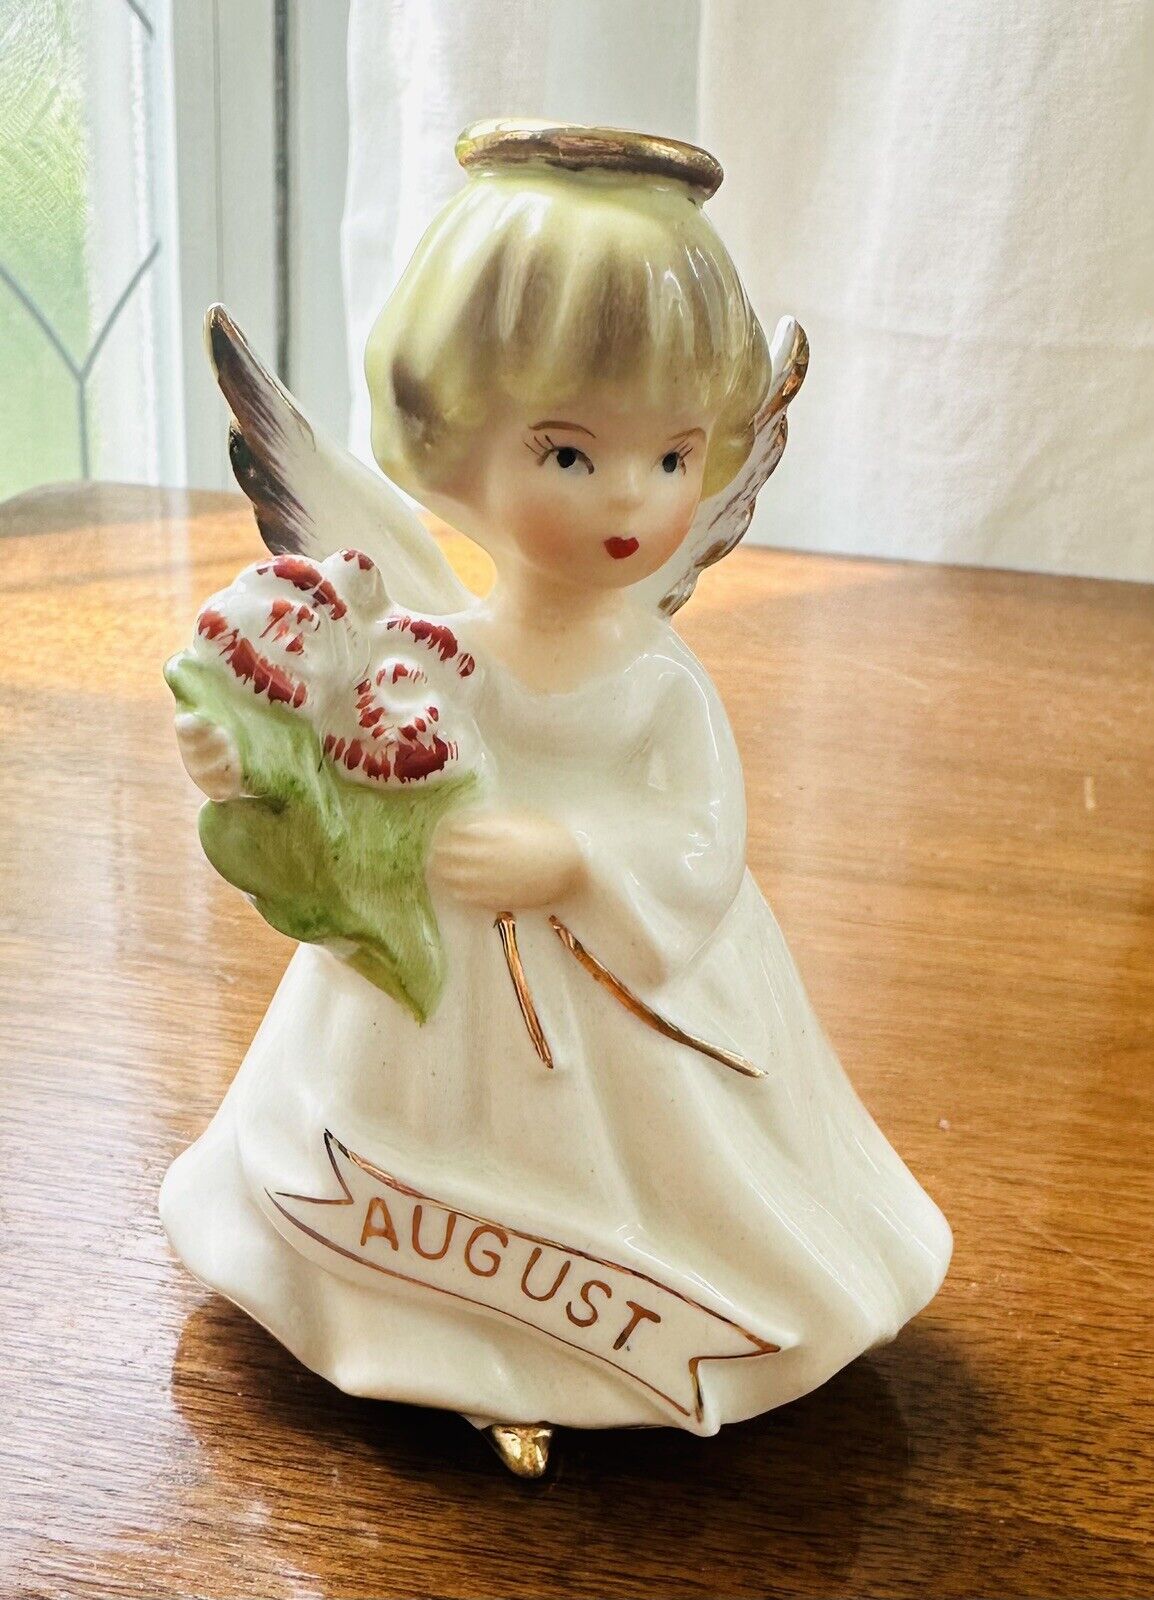 Vintage Enesco August Angel Figurine Girl Very Good Condition 4.25”Japan